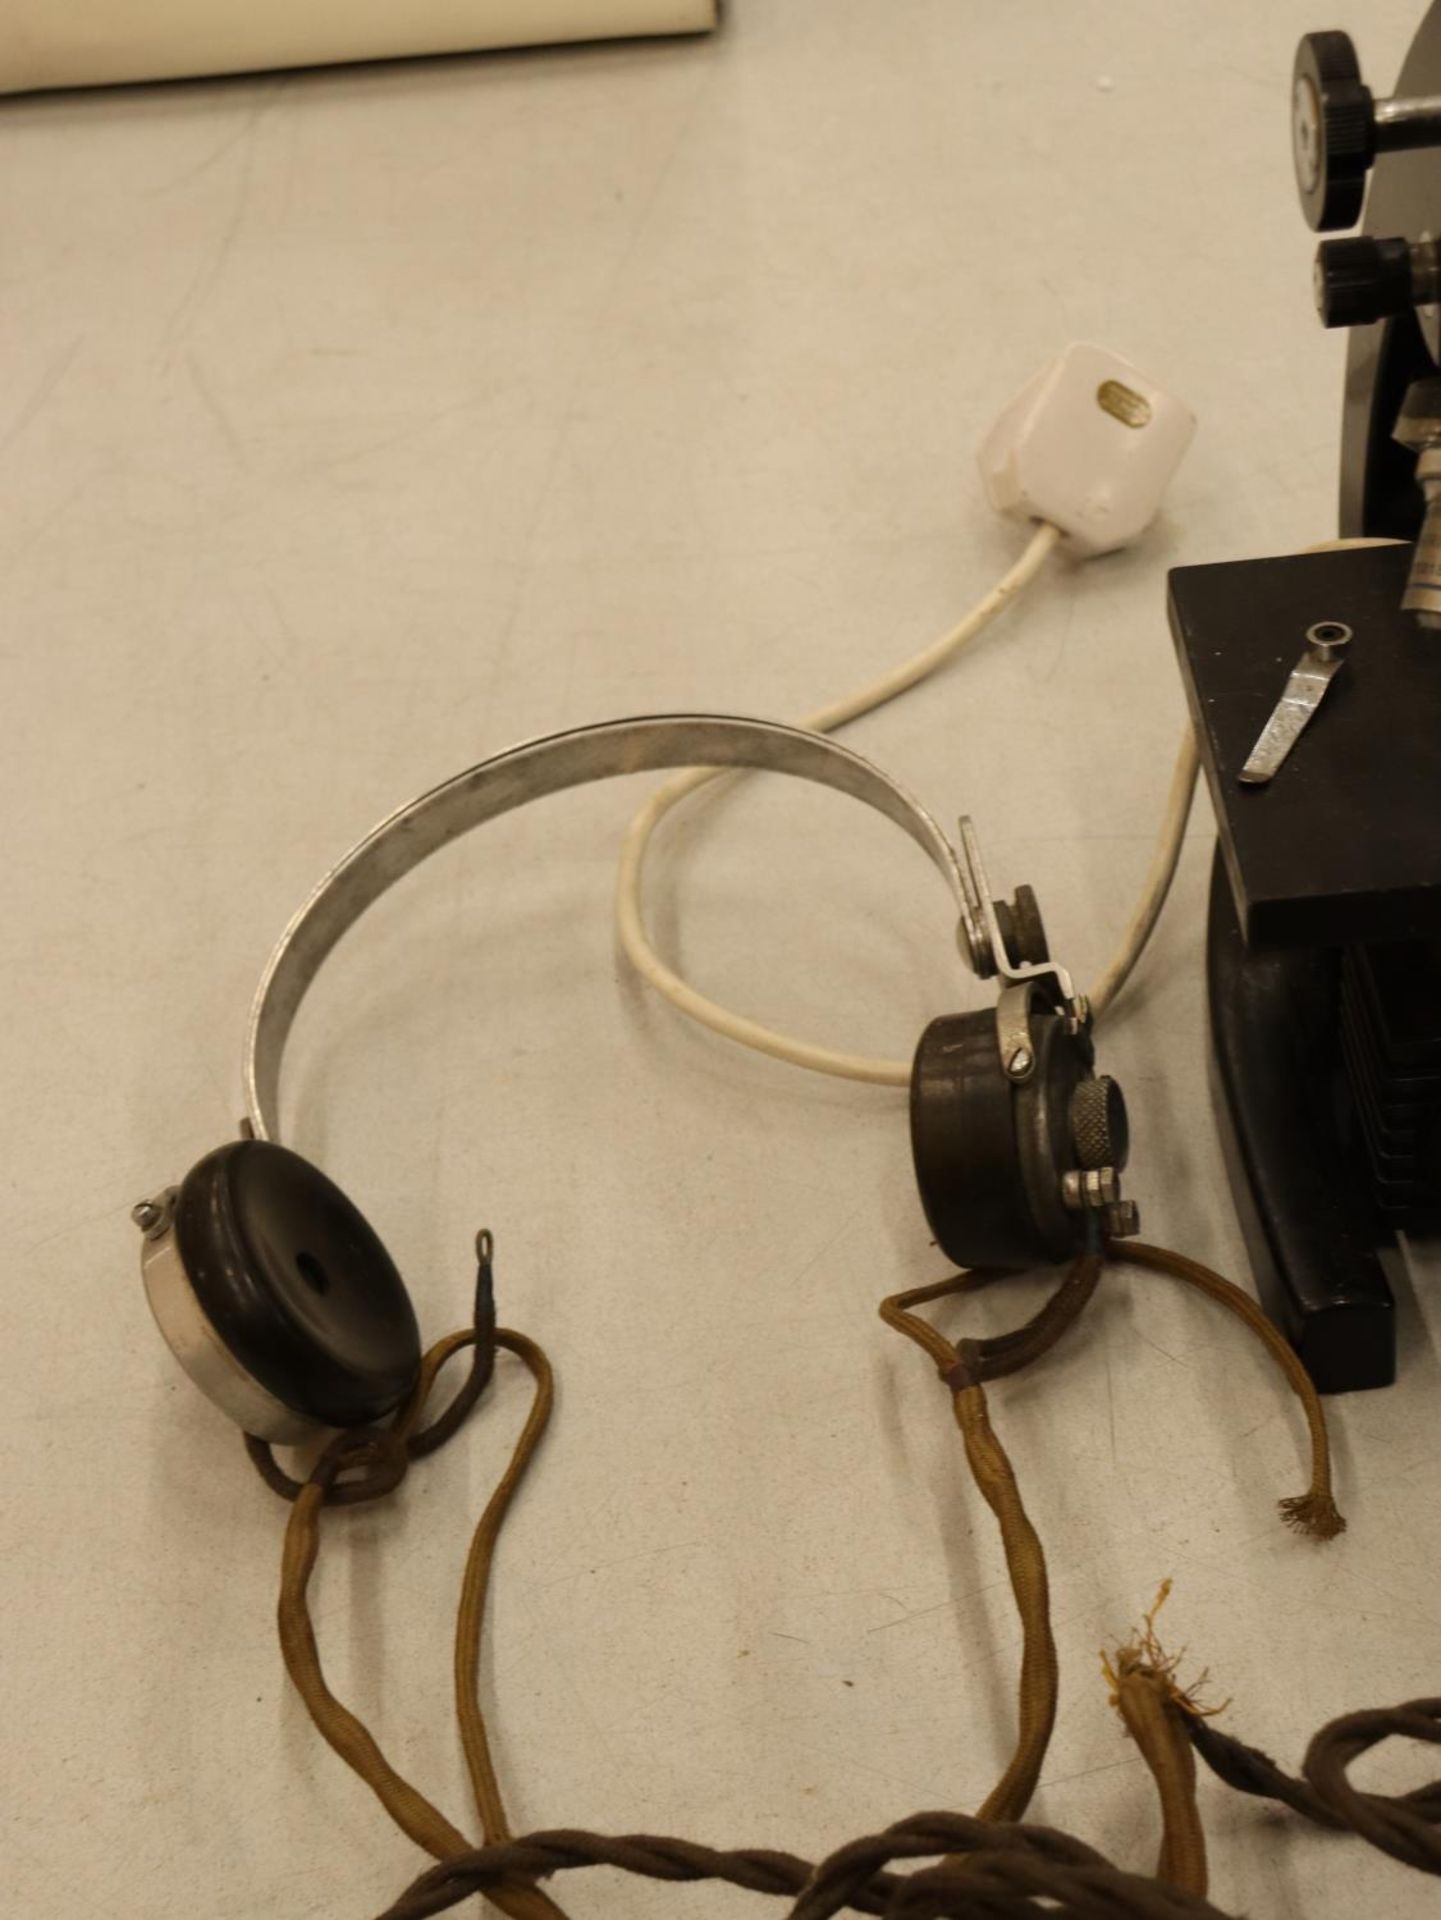 A PHILIP HARRIS VINTAGE MICROSCOPE AND HEADPHONES - Image 3 of 5